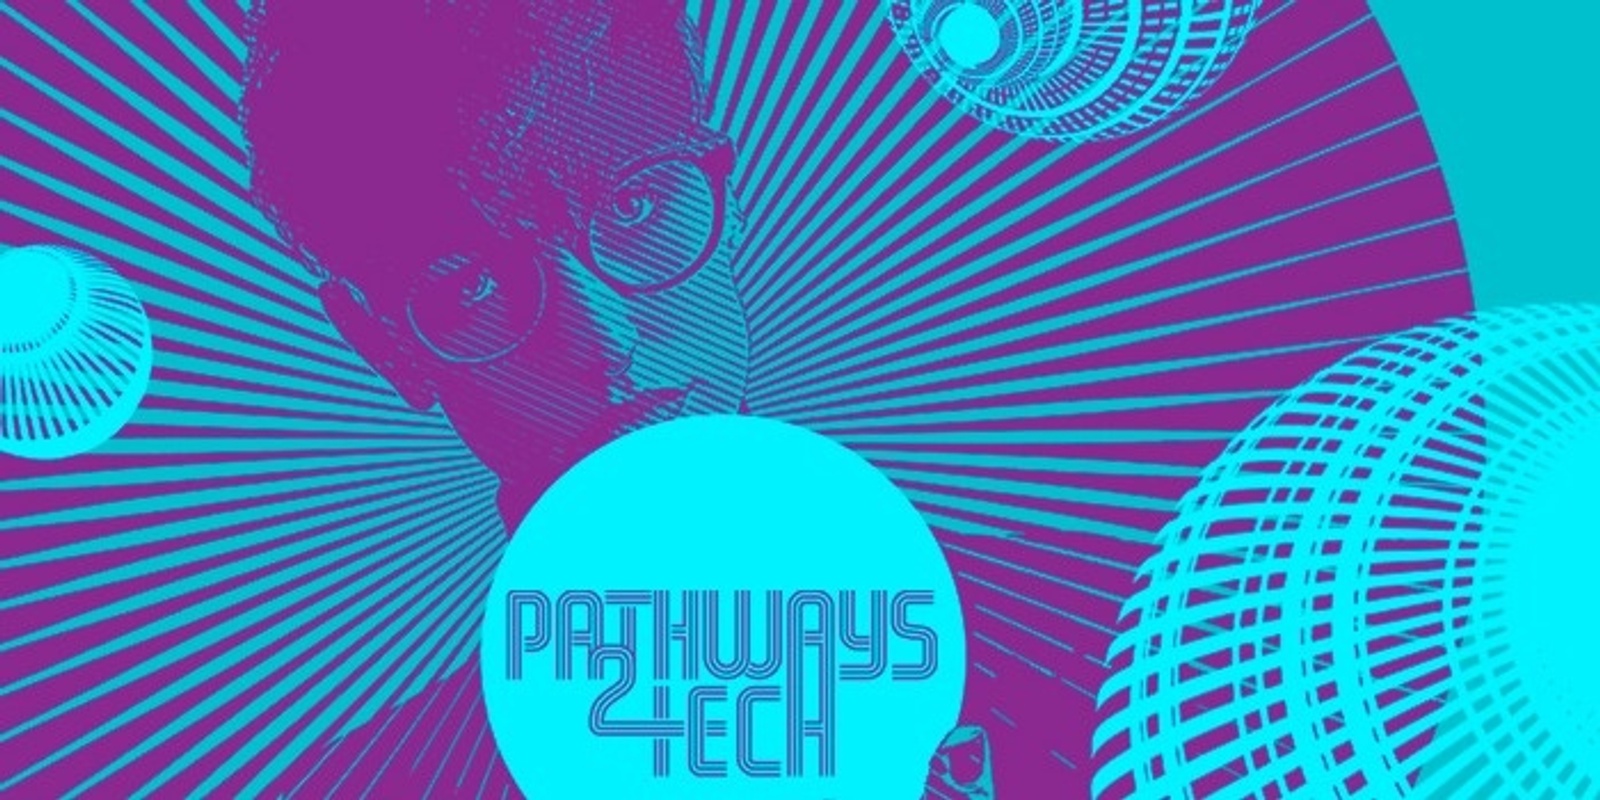 Pathways to Tech Series - Tech Startups and Entrepreneurship in Ōtautahi/Christchurch